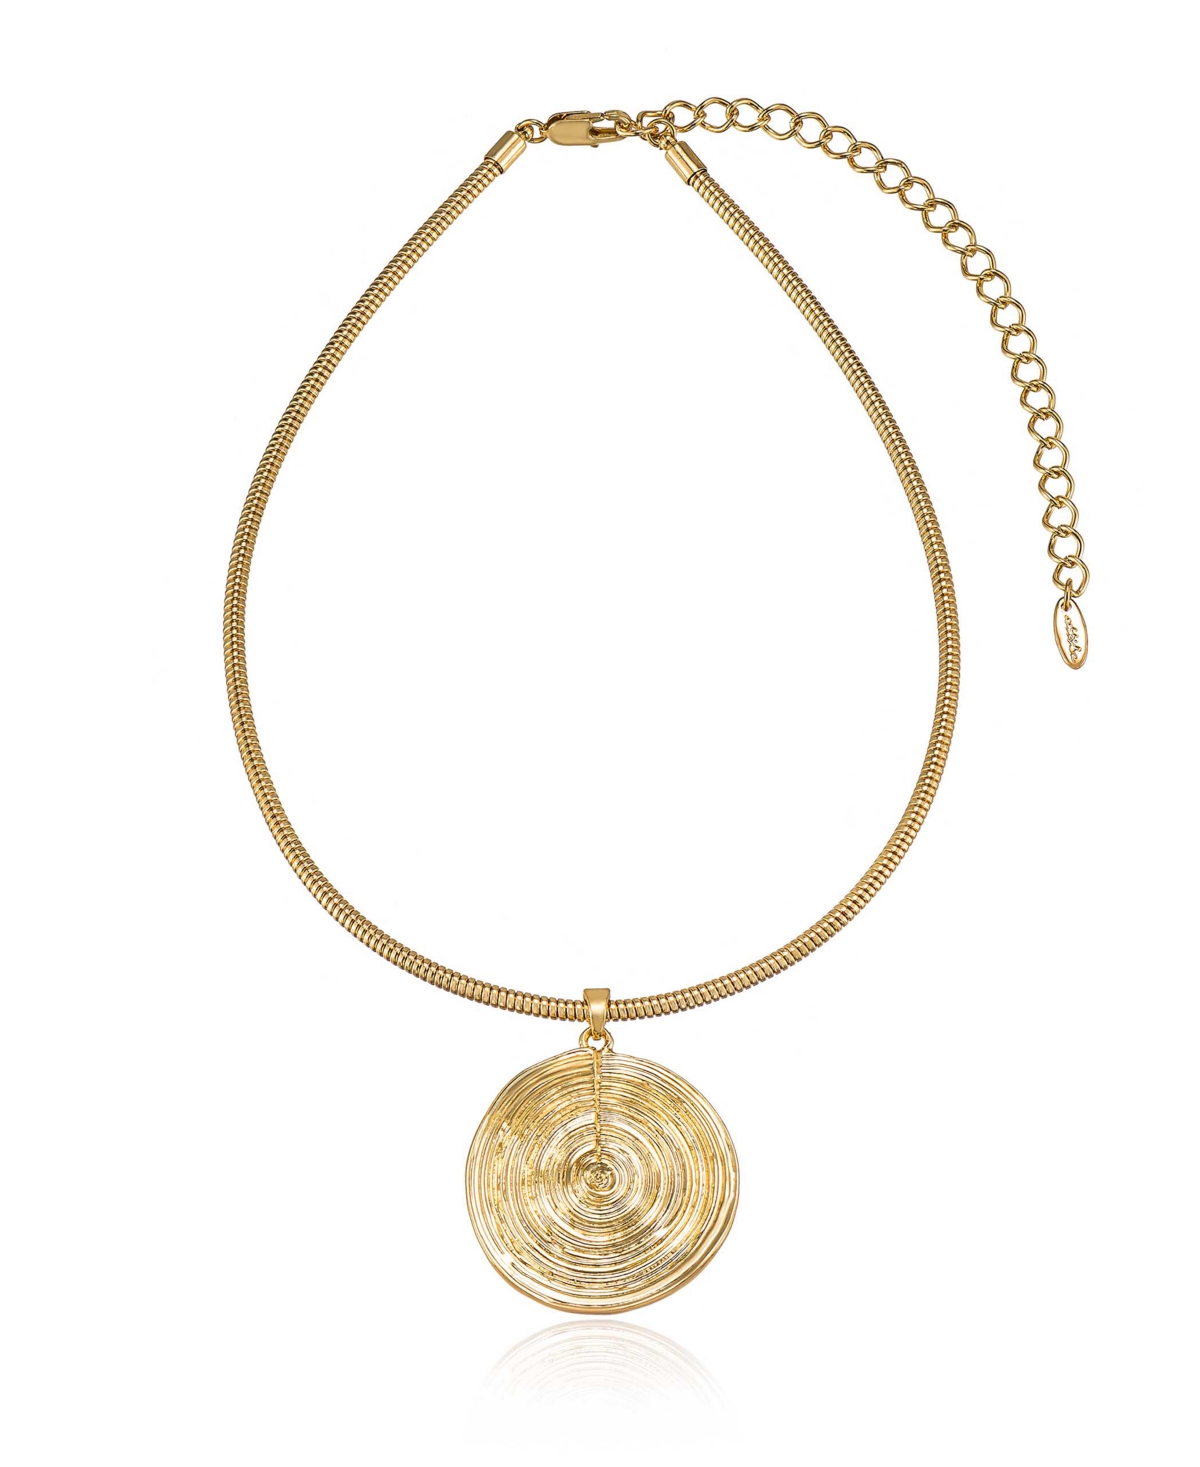 Statement Swirl Pendant 18K Gold-Plated Choker Necklace - Gold